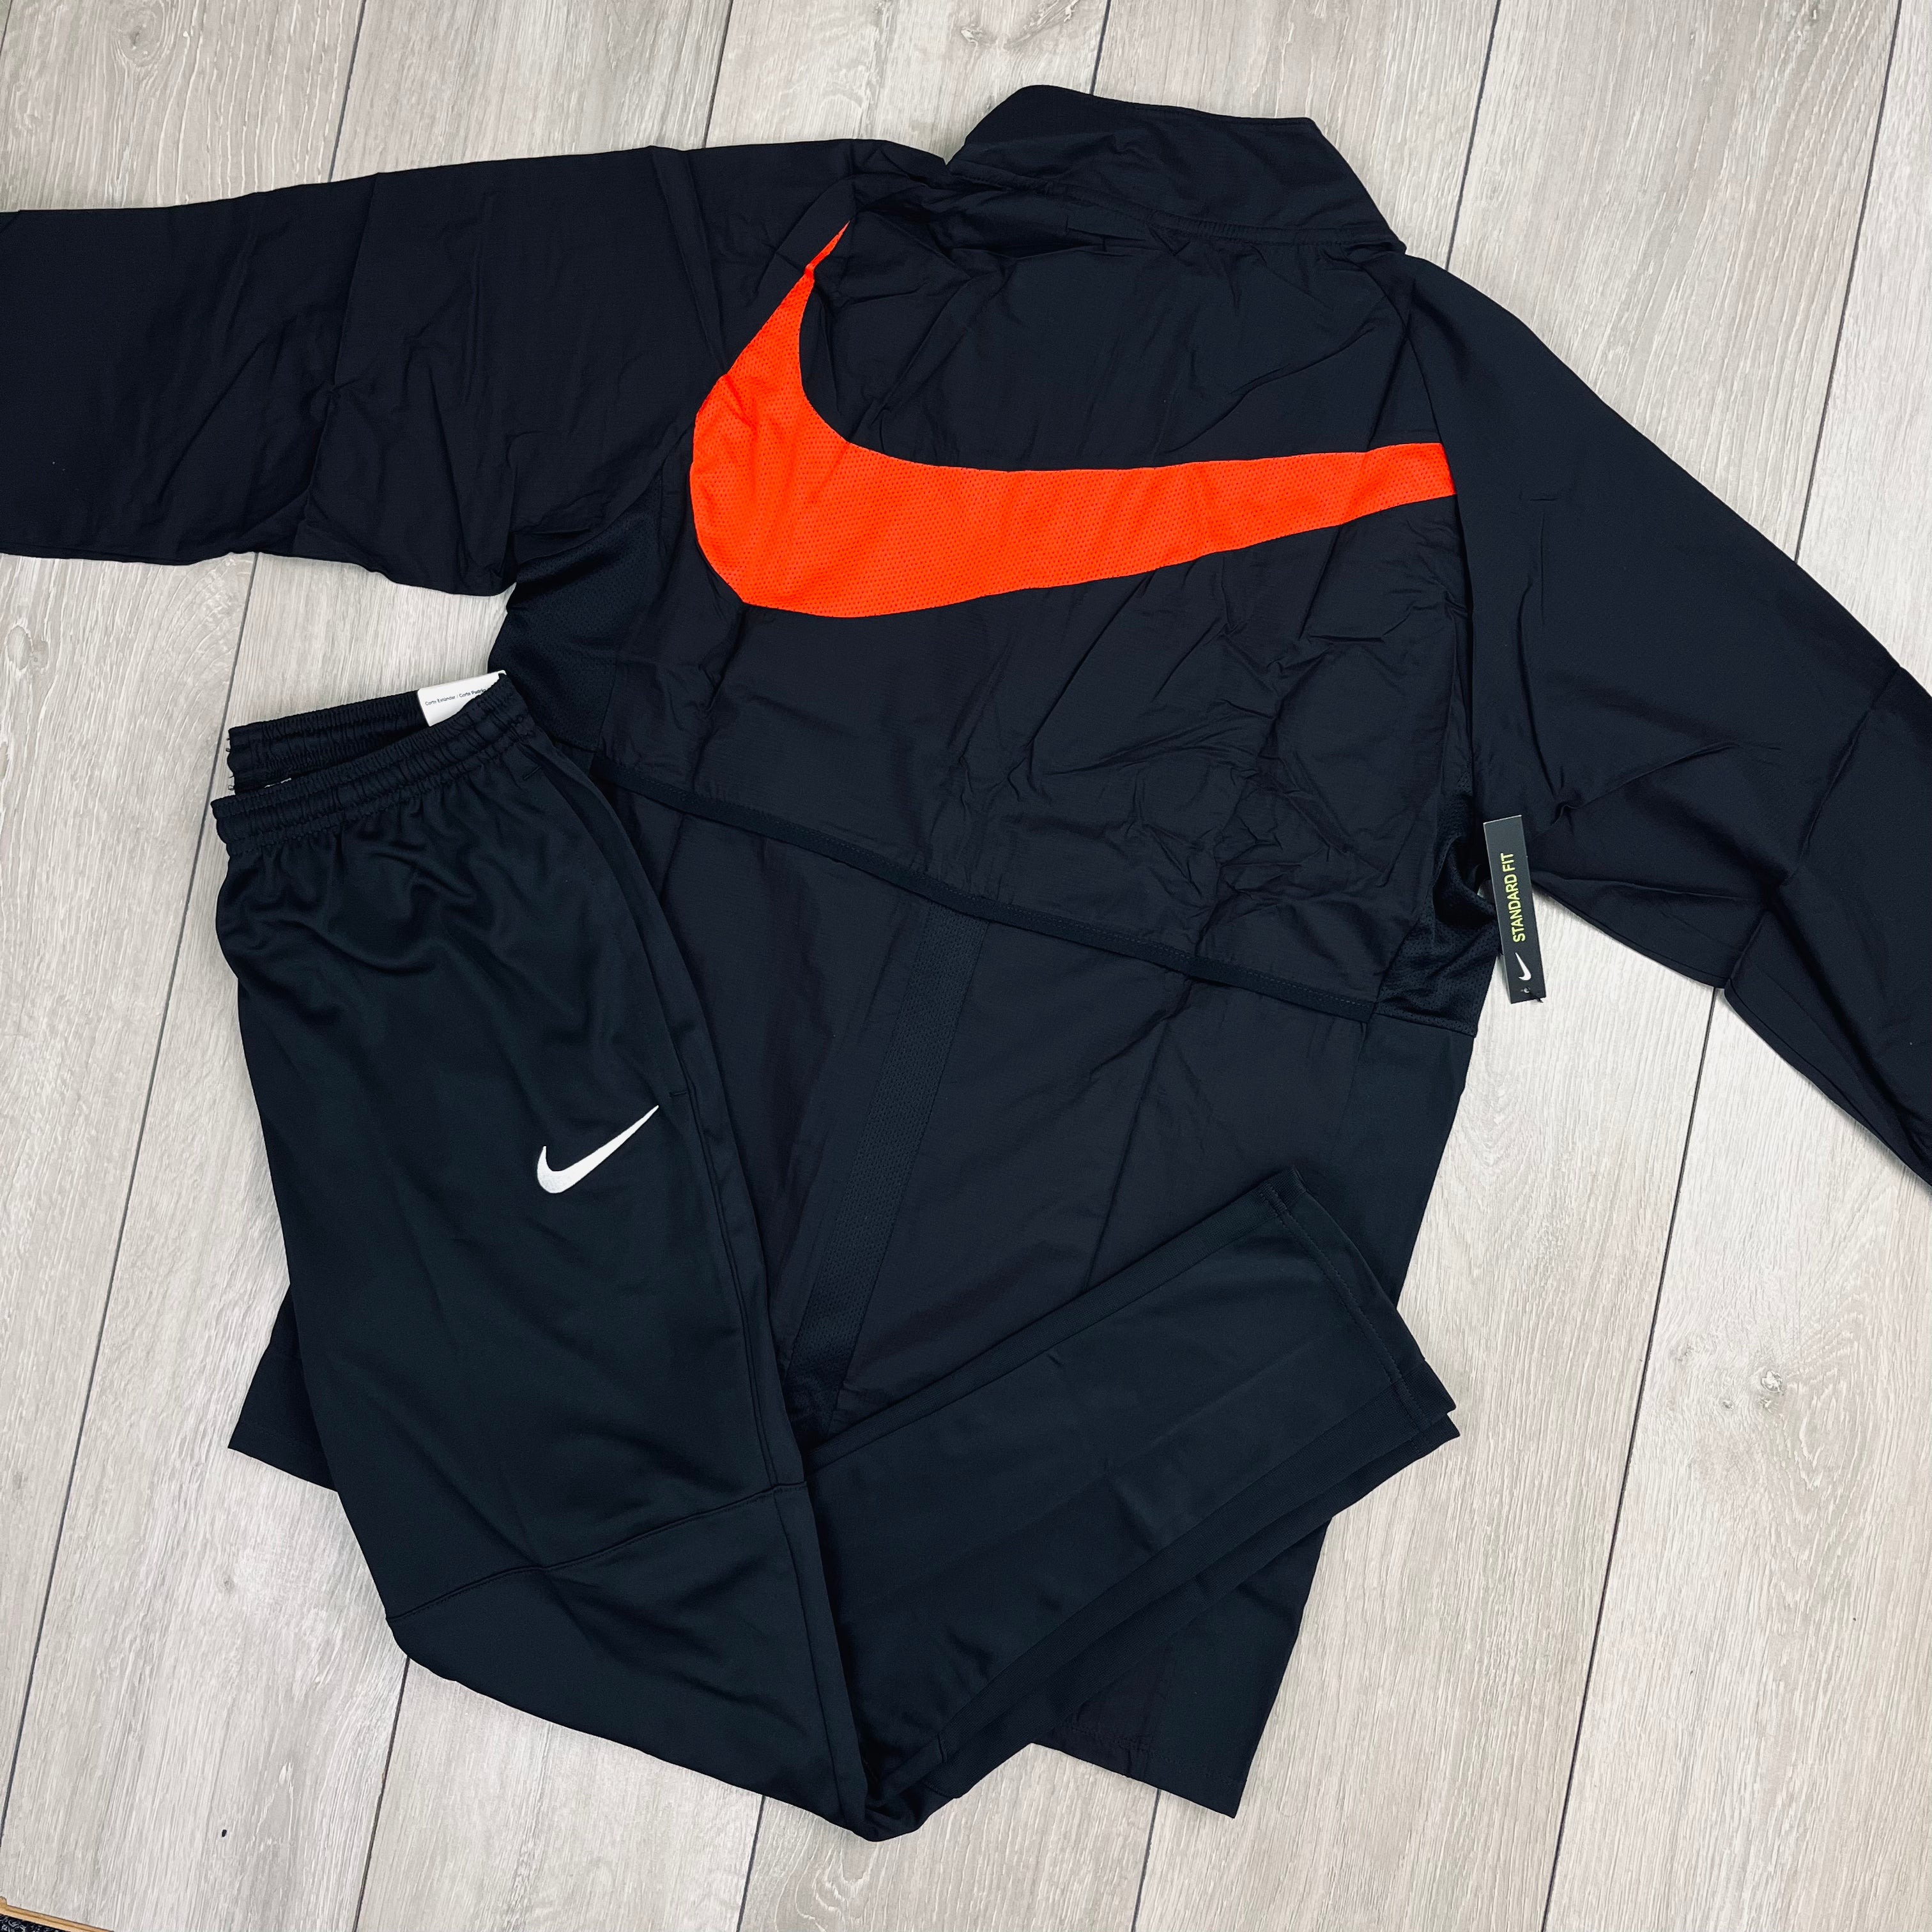 Nike Swoosh Set - Black